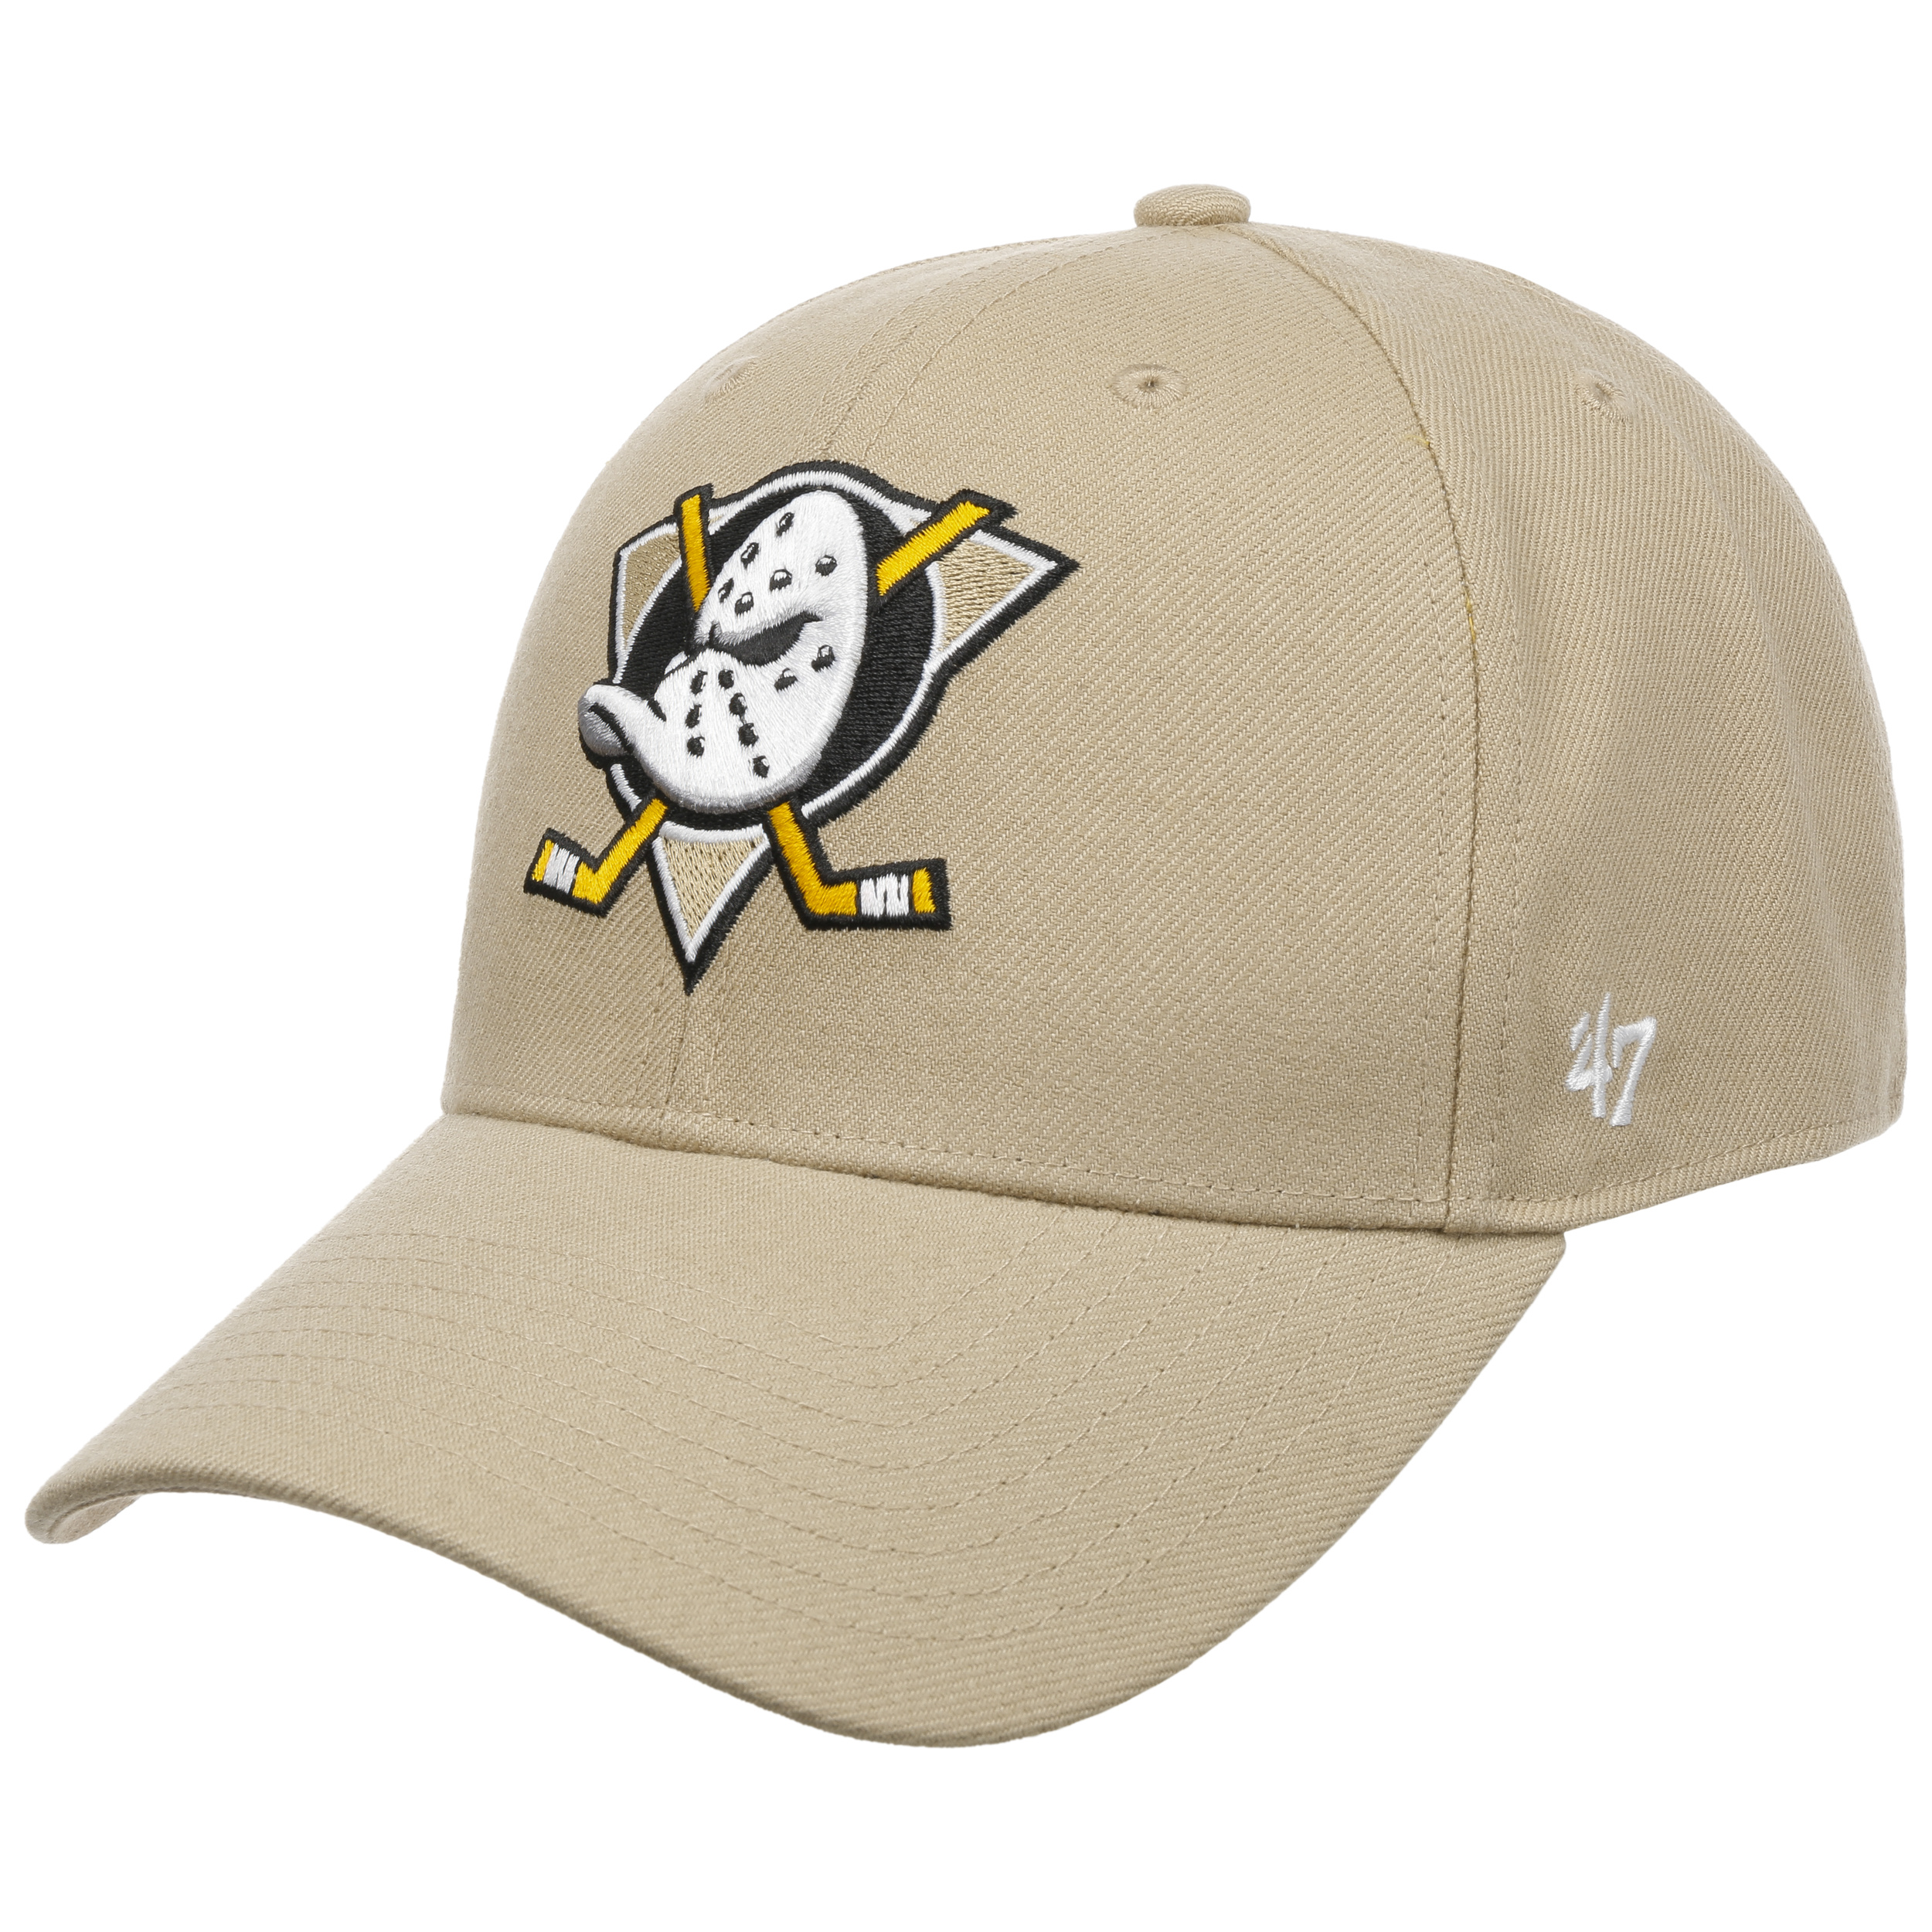 Anaheim Ducks Men's 47 Adjustable Trucker Hat